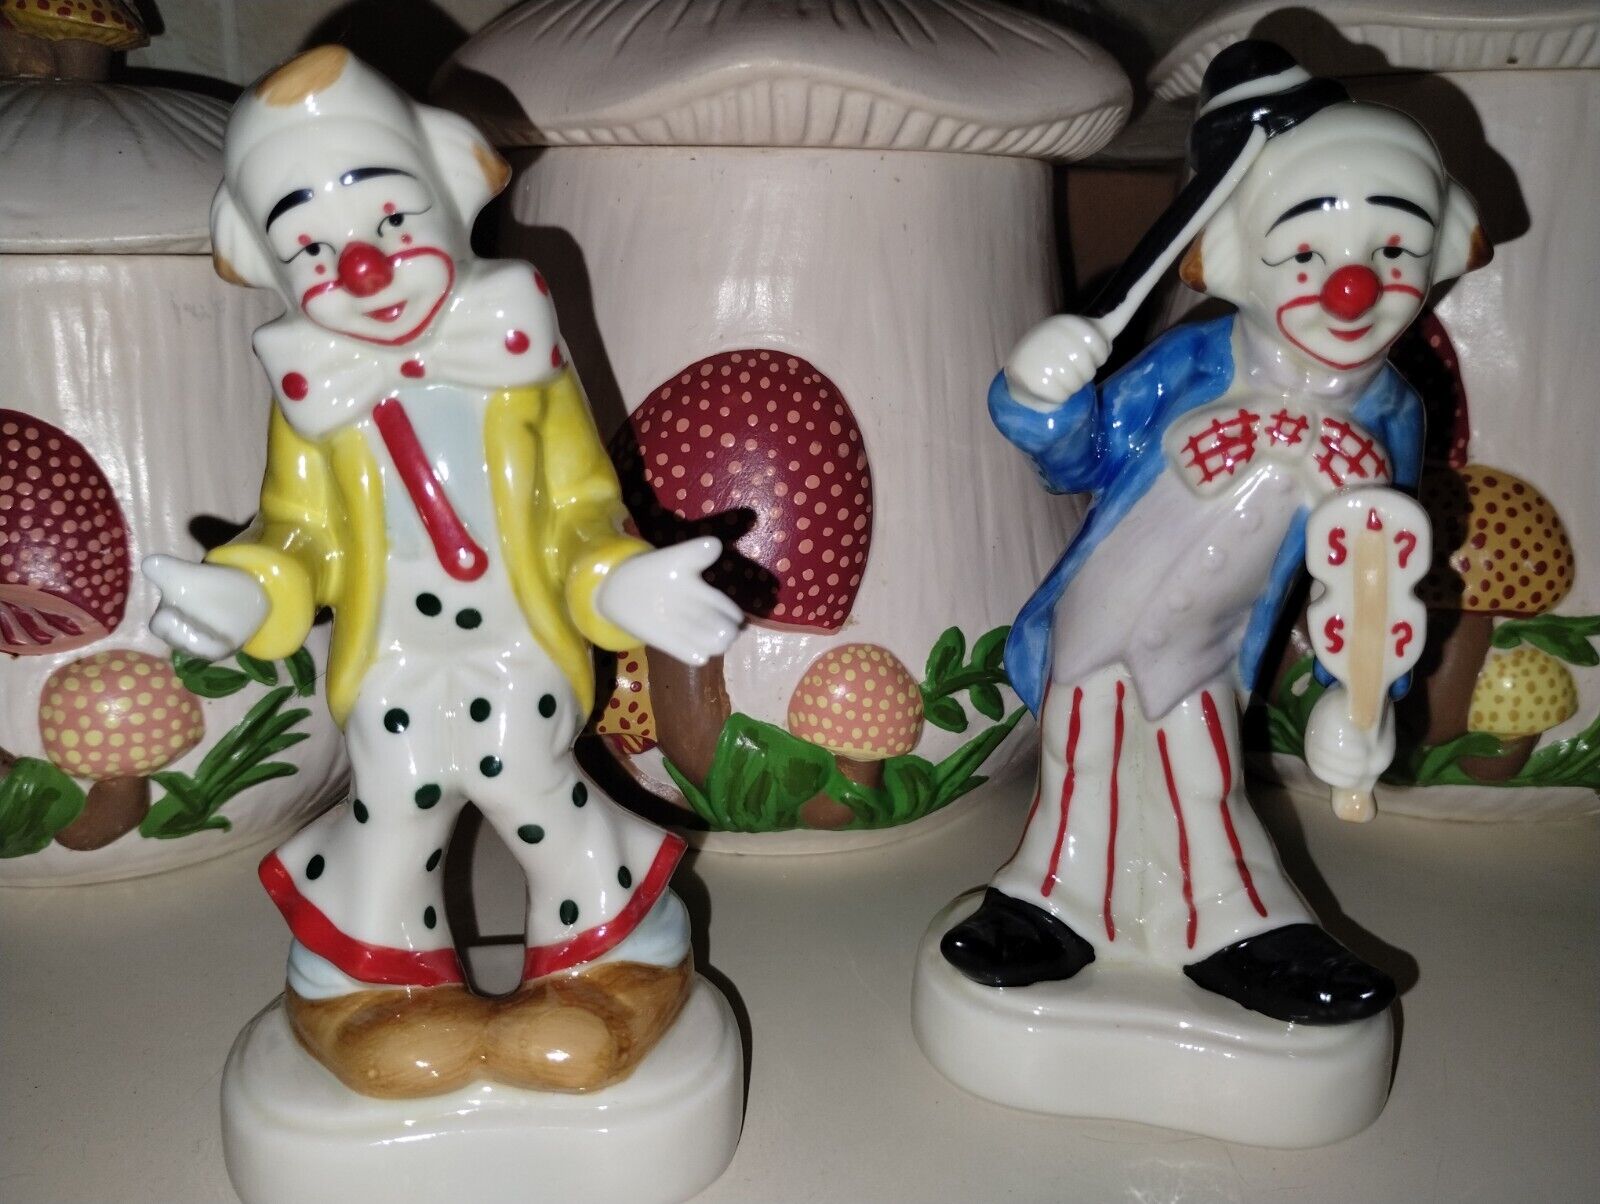 Vintage Ceramic HOMCO 1445 Clown Figurines Set of 2